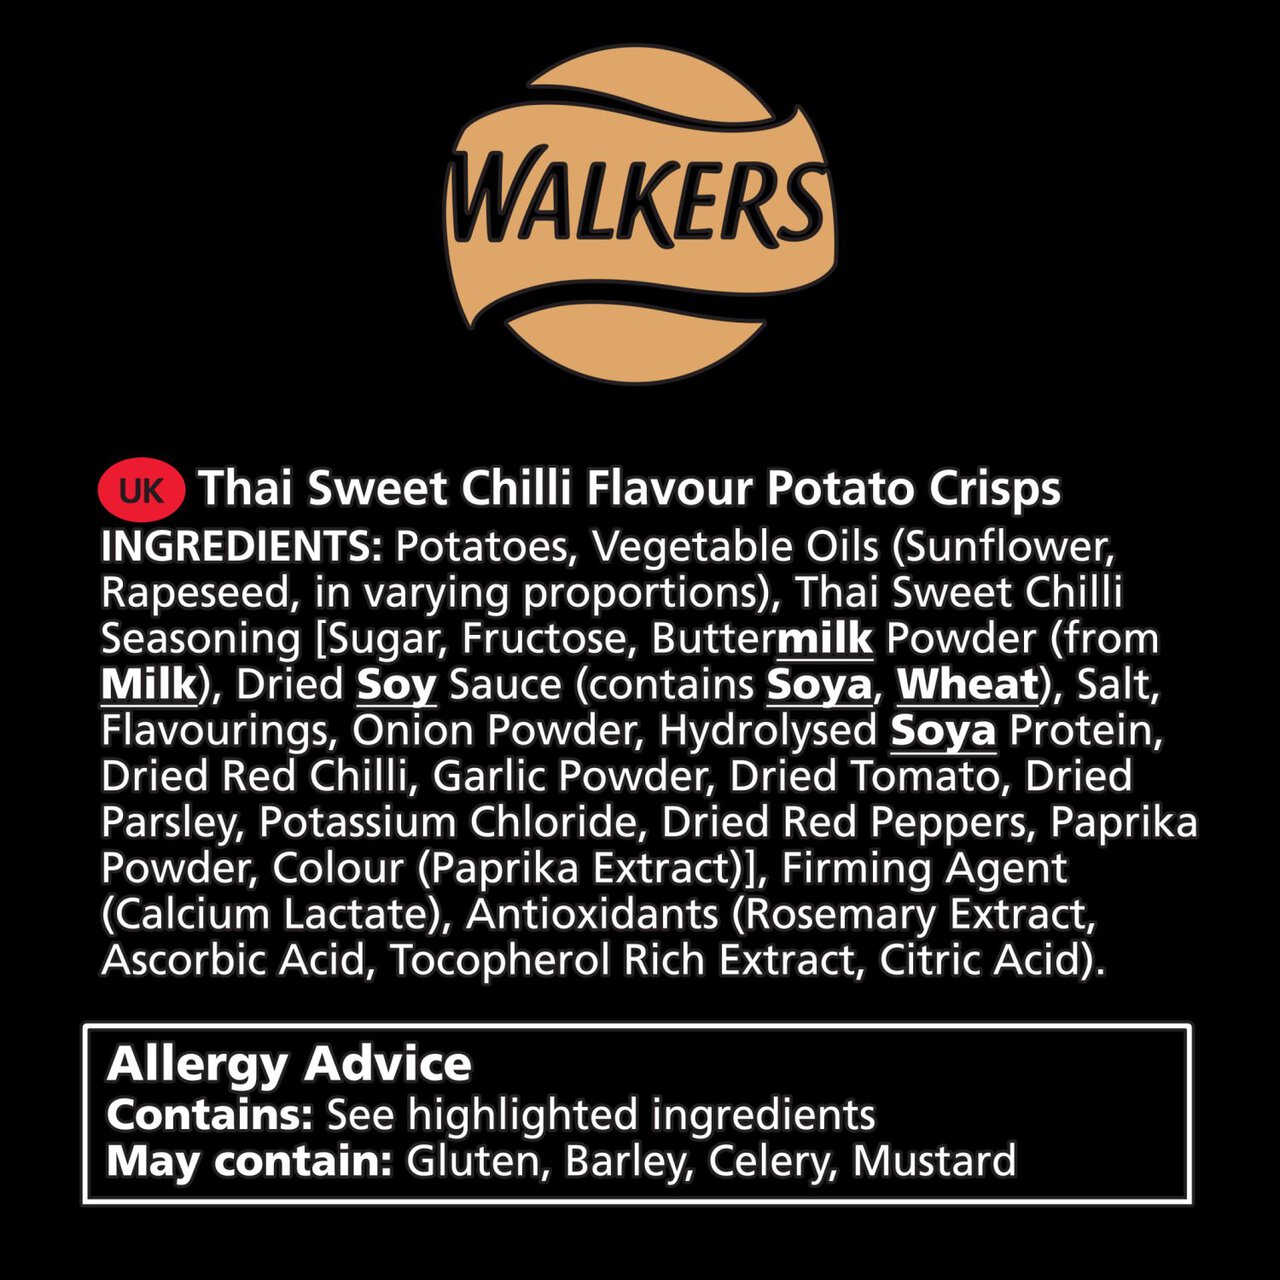 Sensations Thai Sweet Chilli Sharing Bag Crisps 150g